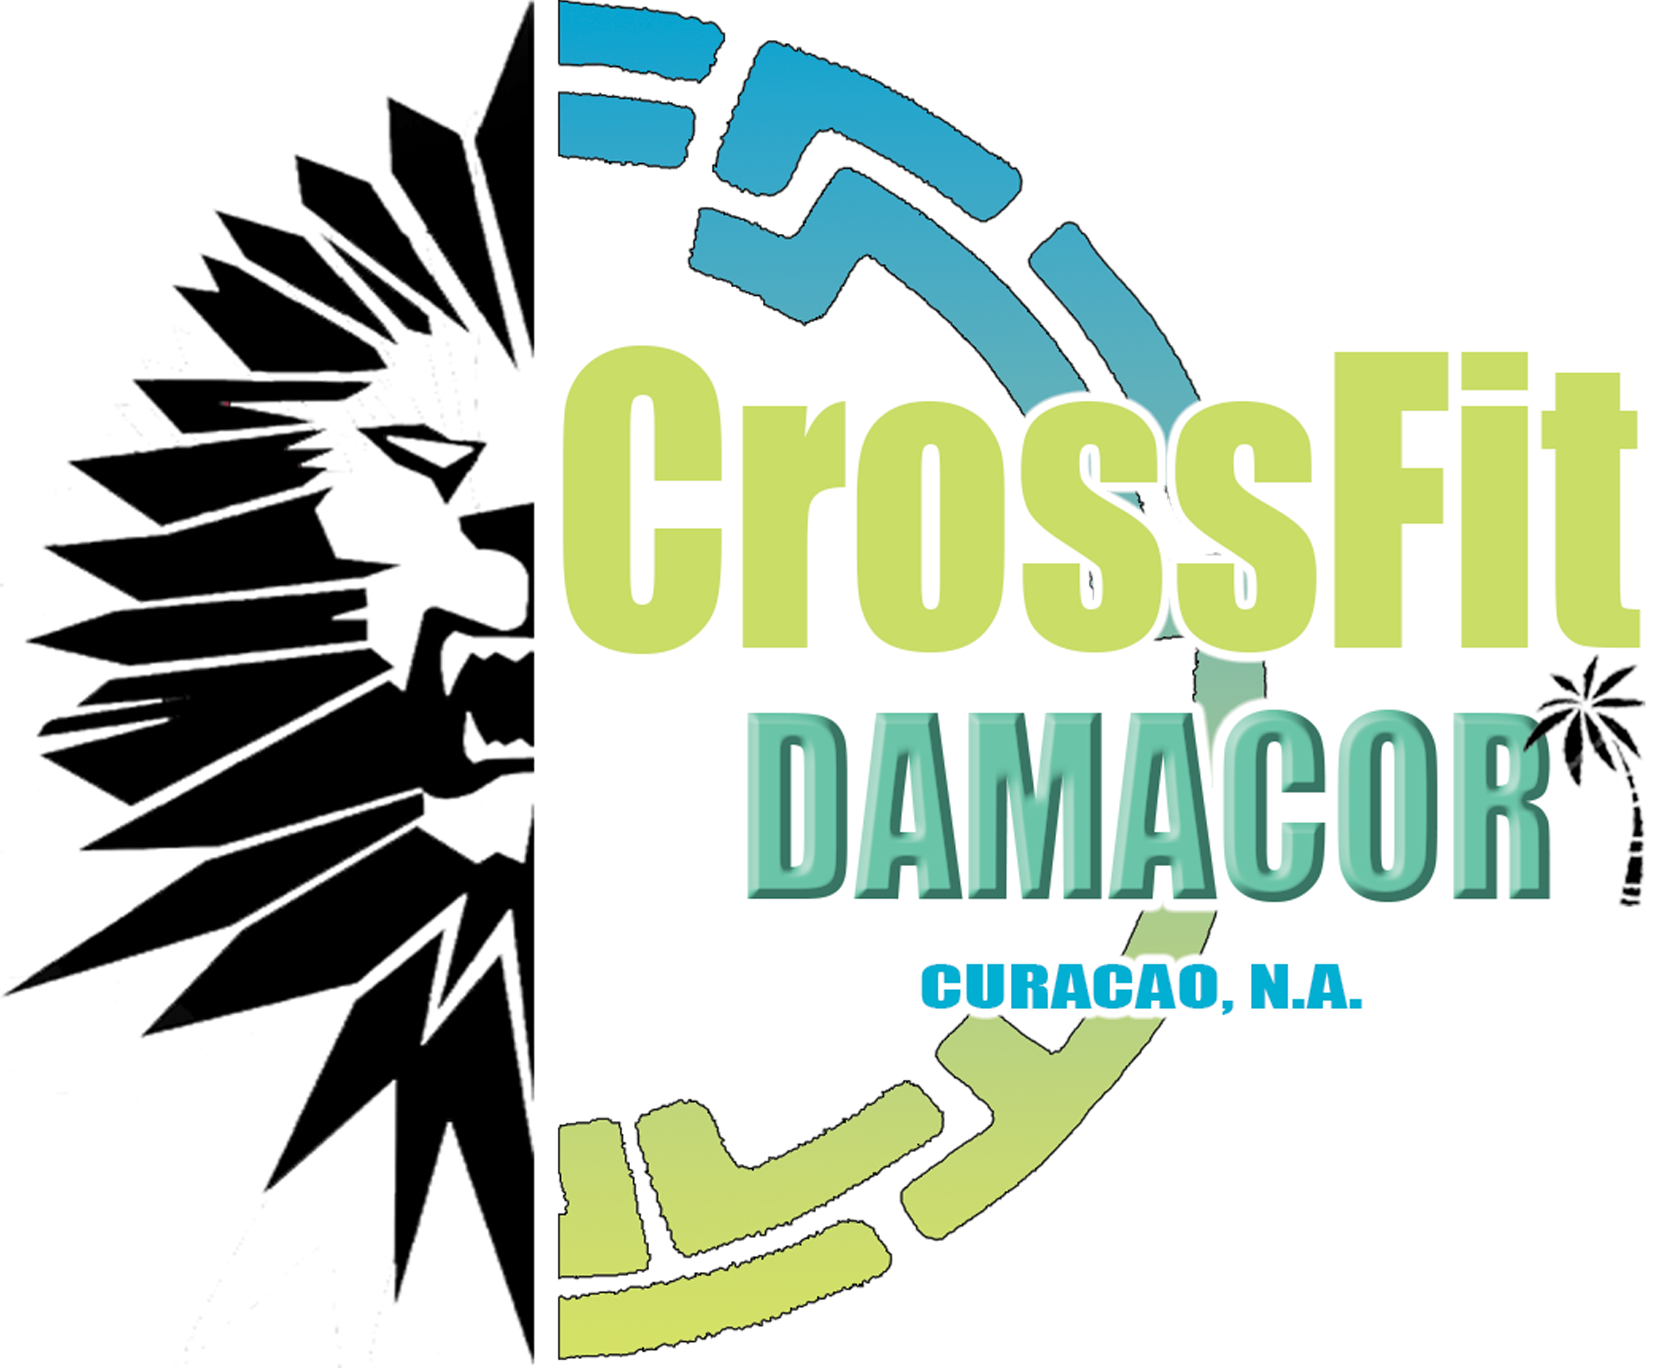 CrossFit Damacor